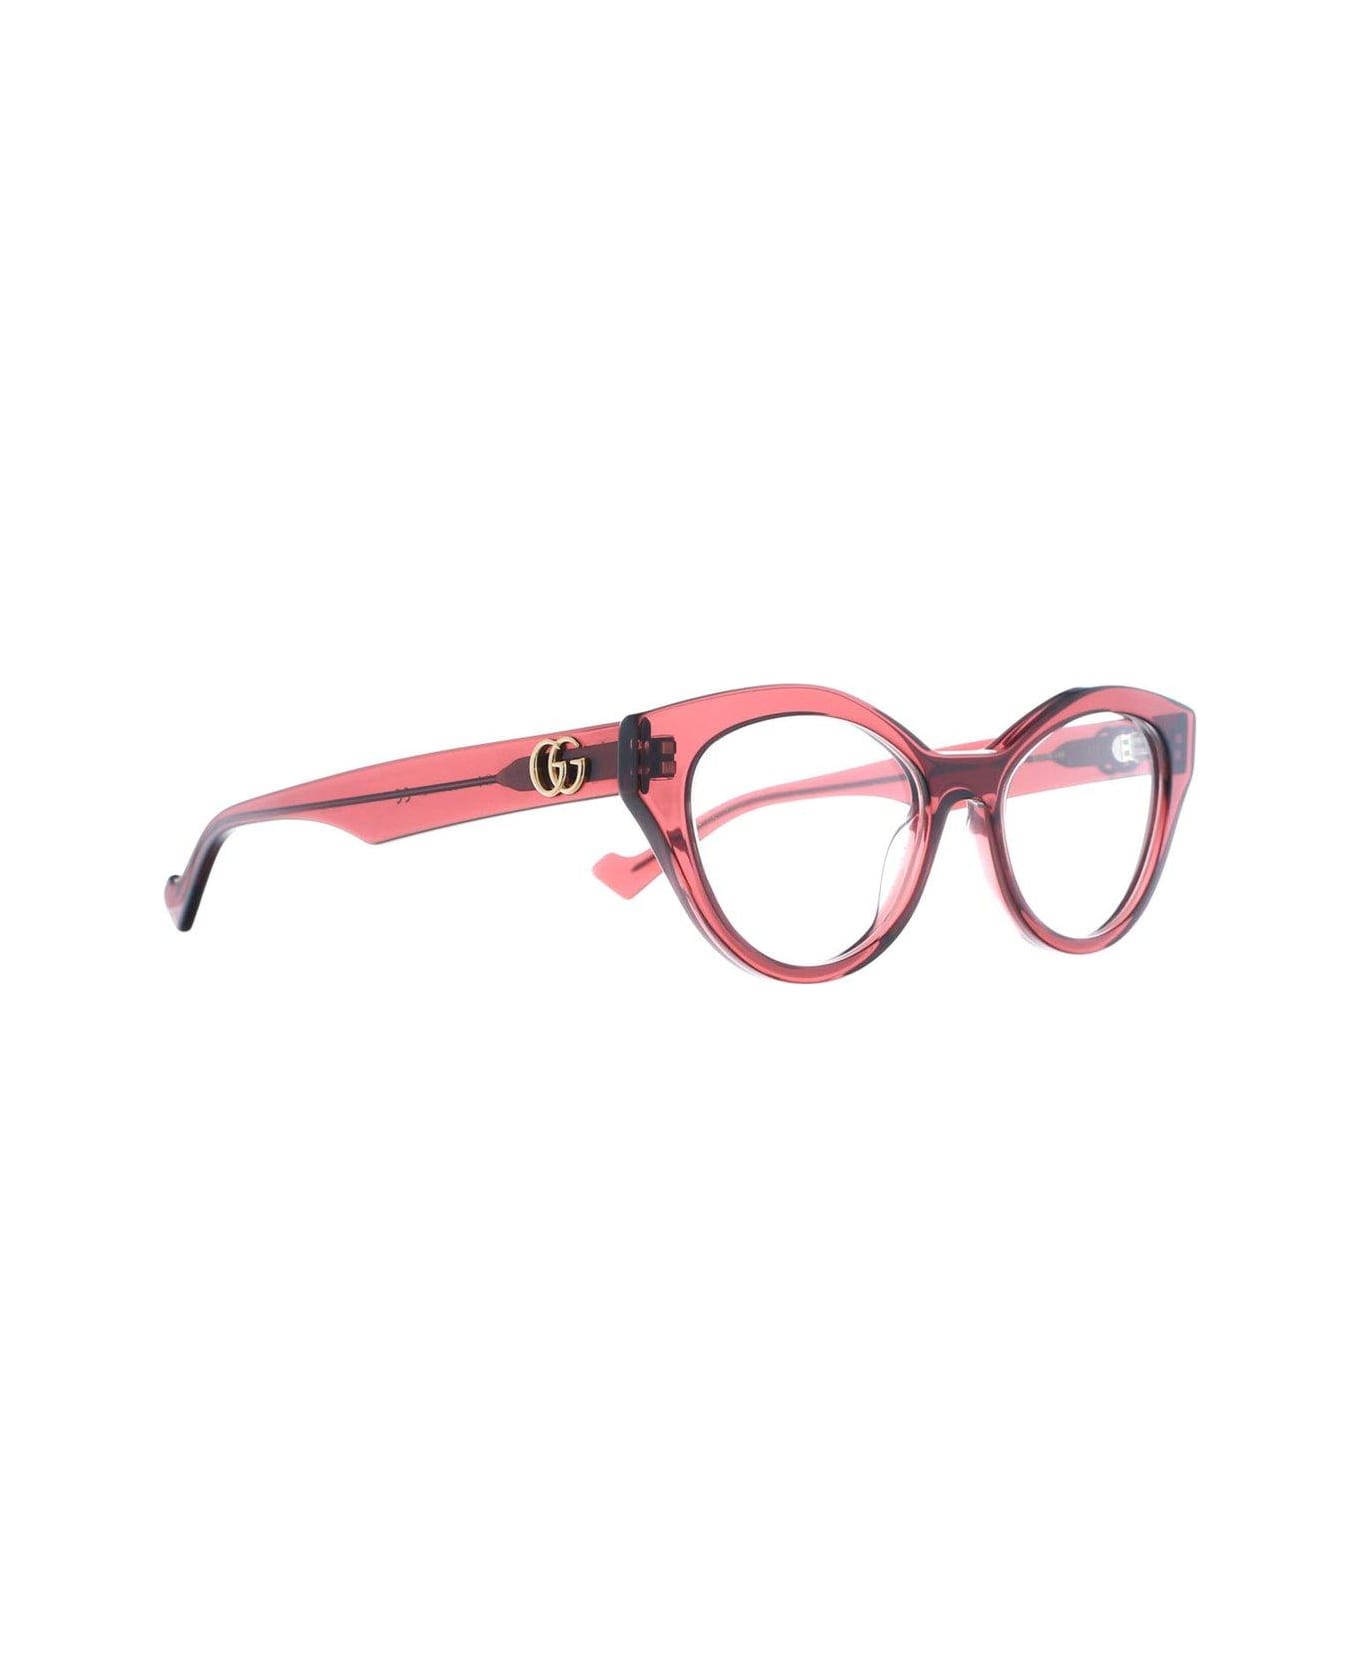 Gucci Eyewear Cat Eye Frame Glasses - 003 burgundy burgundy tra